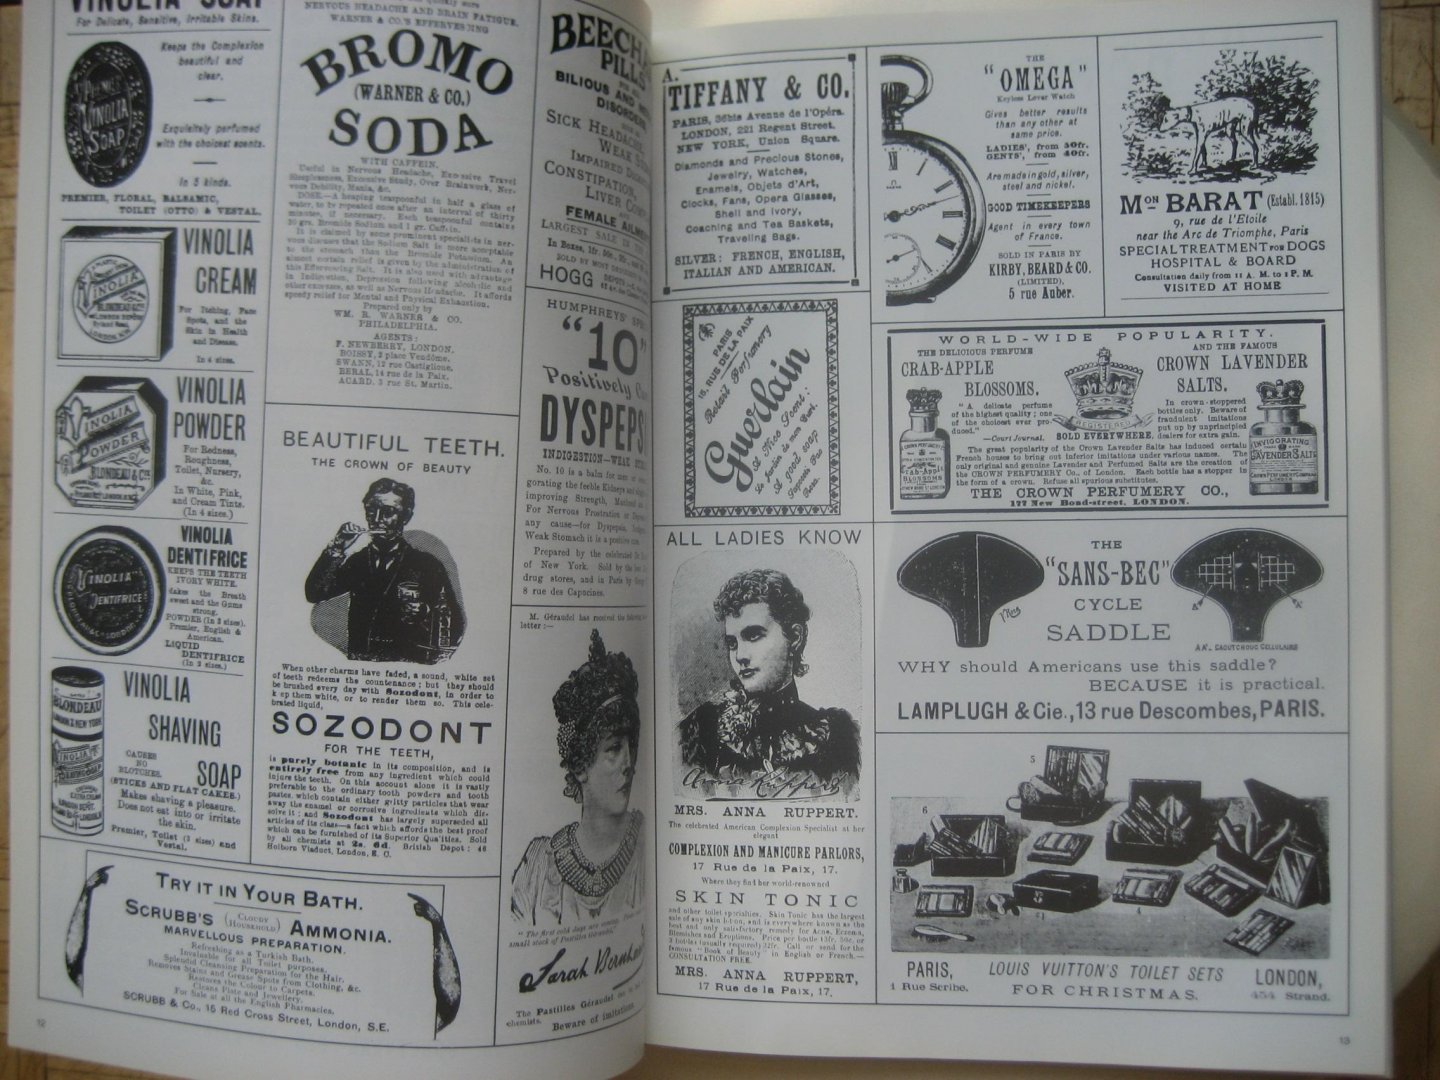 Richard H. Morgan - Advertising in The Paris Herald / 1890 - 1919